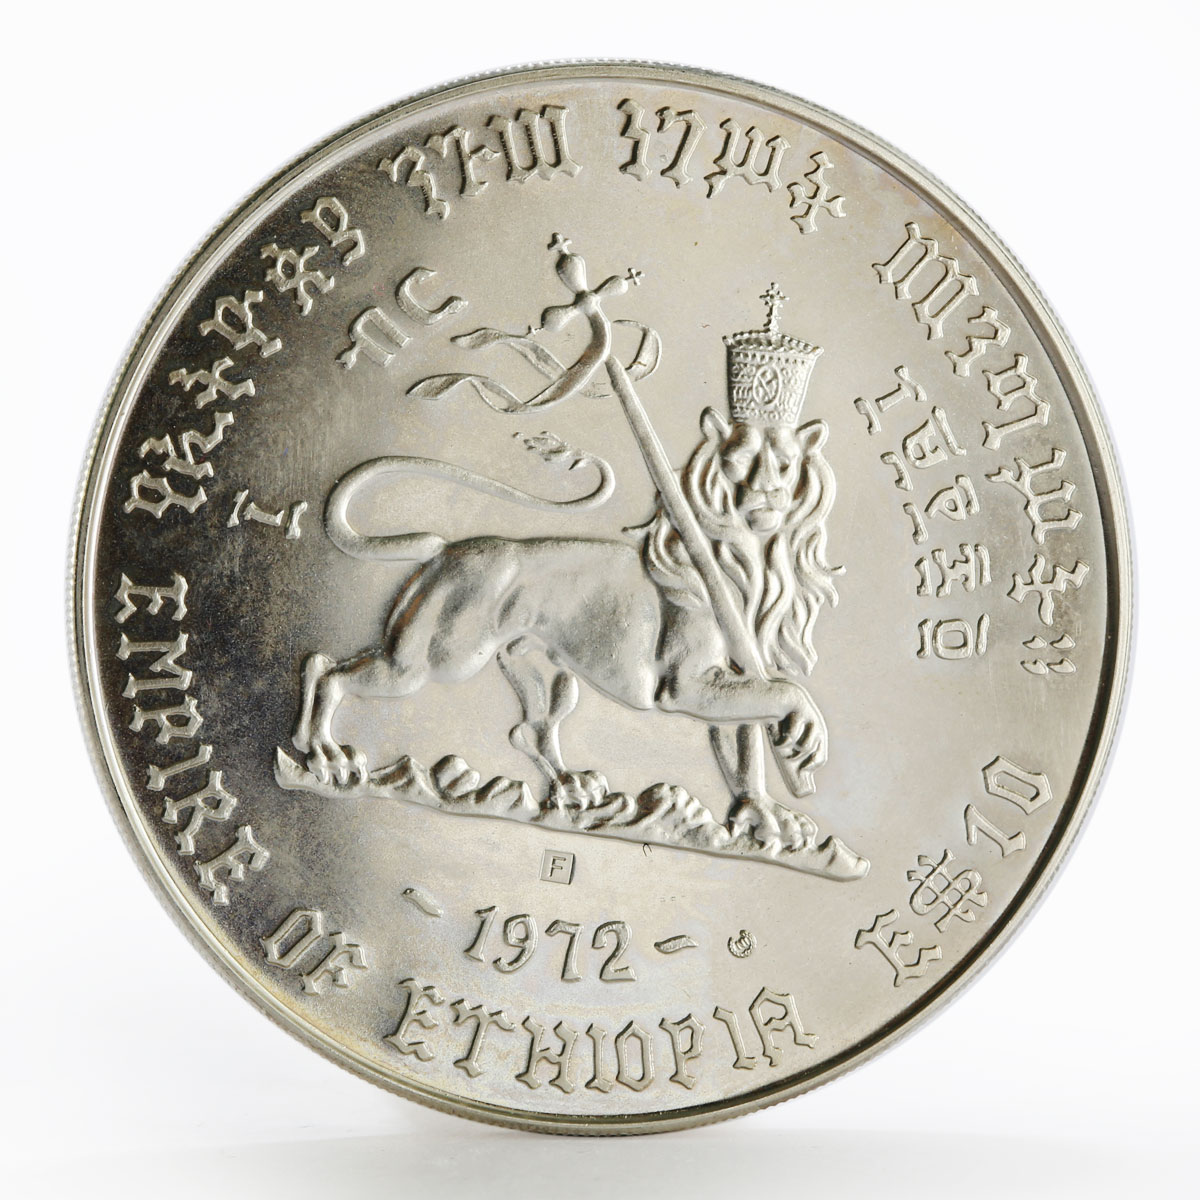 Ethiopia 10 birr Emperor Haile Selassie F-N rare silver coin 1972